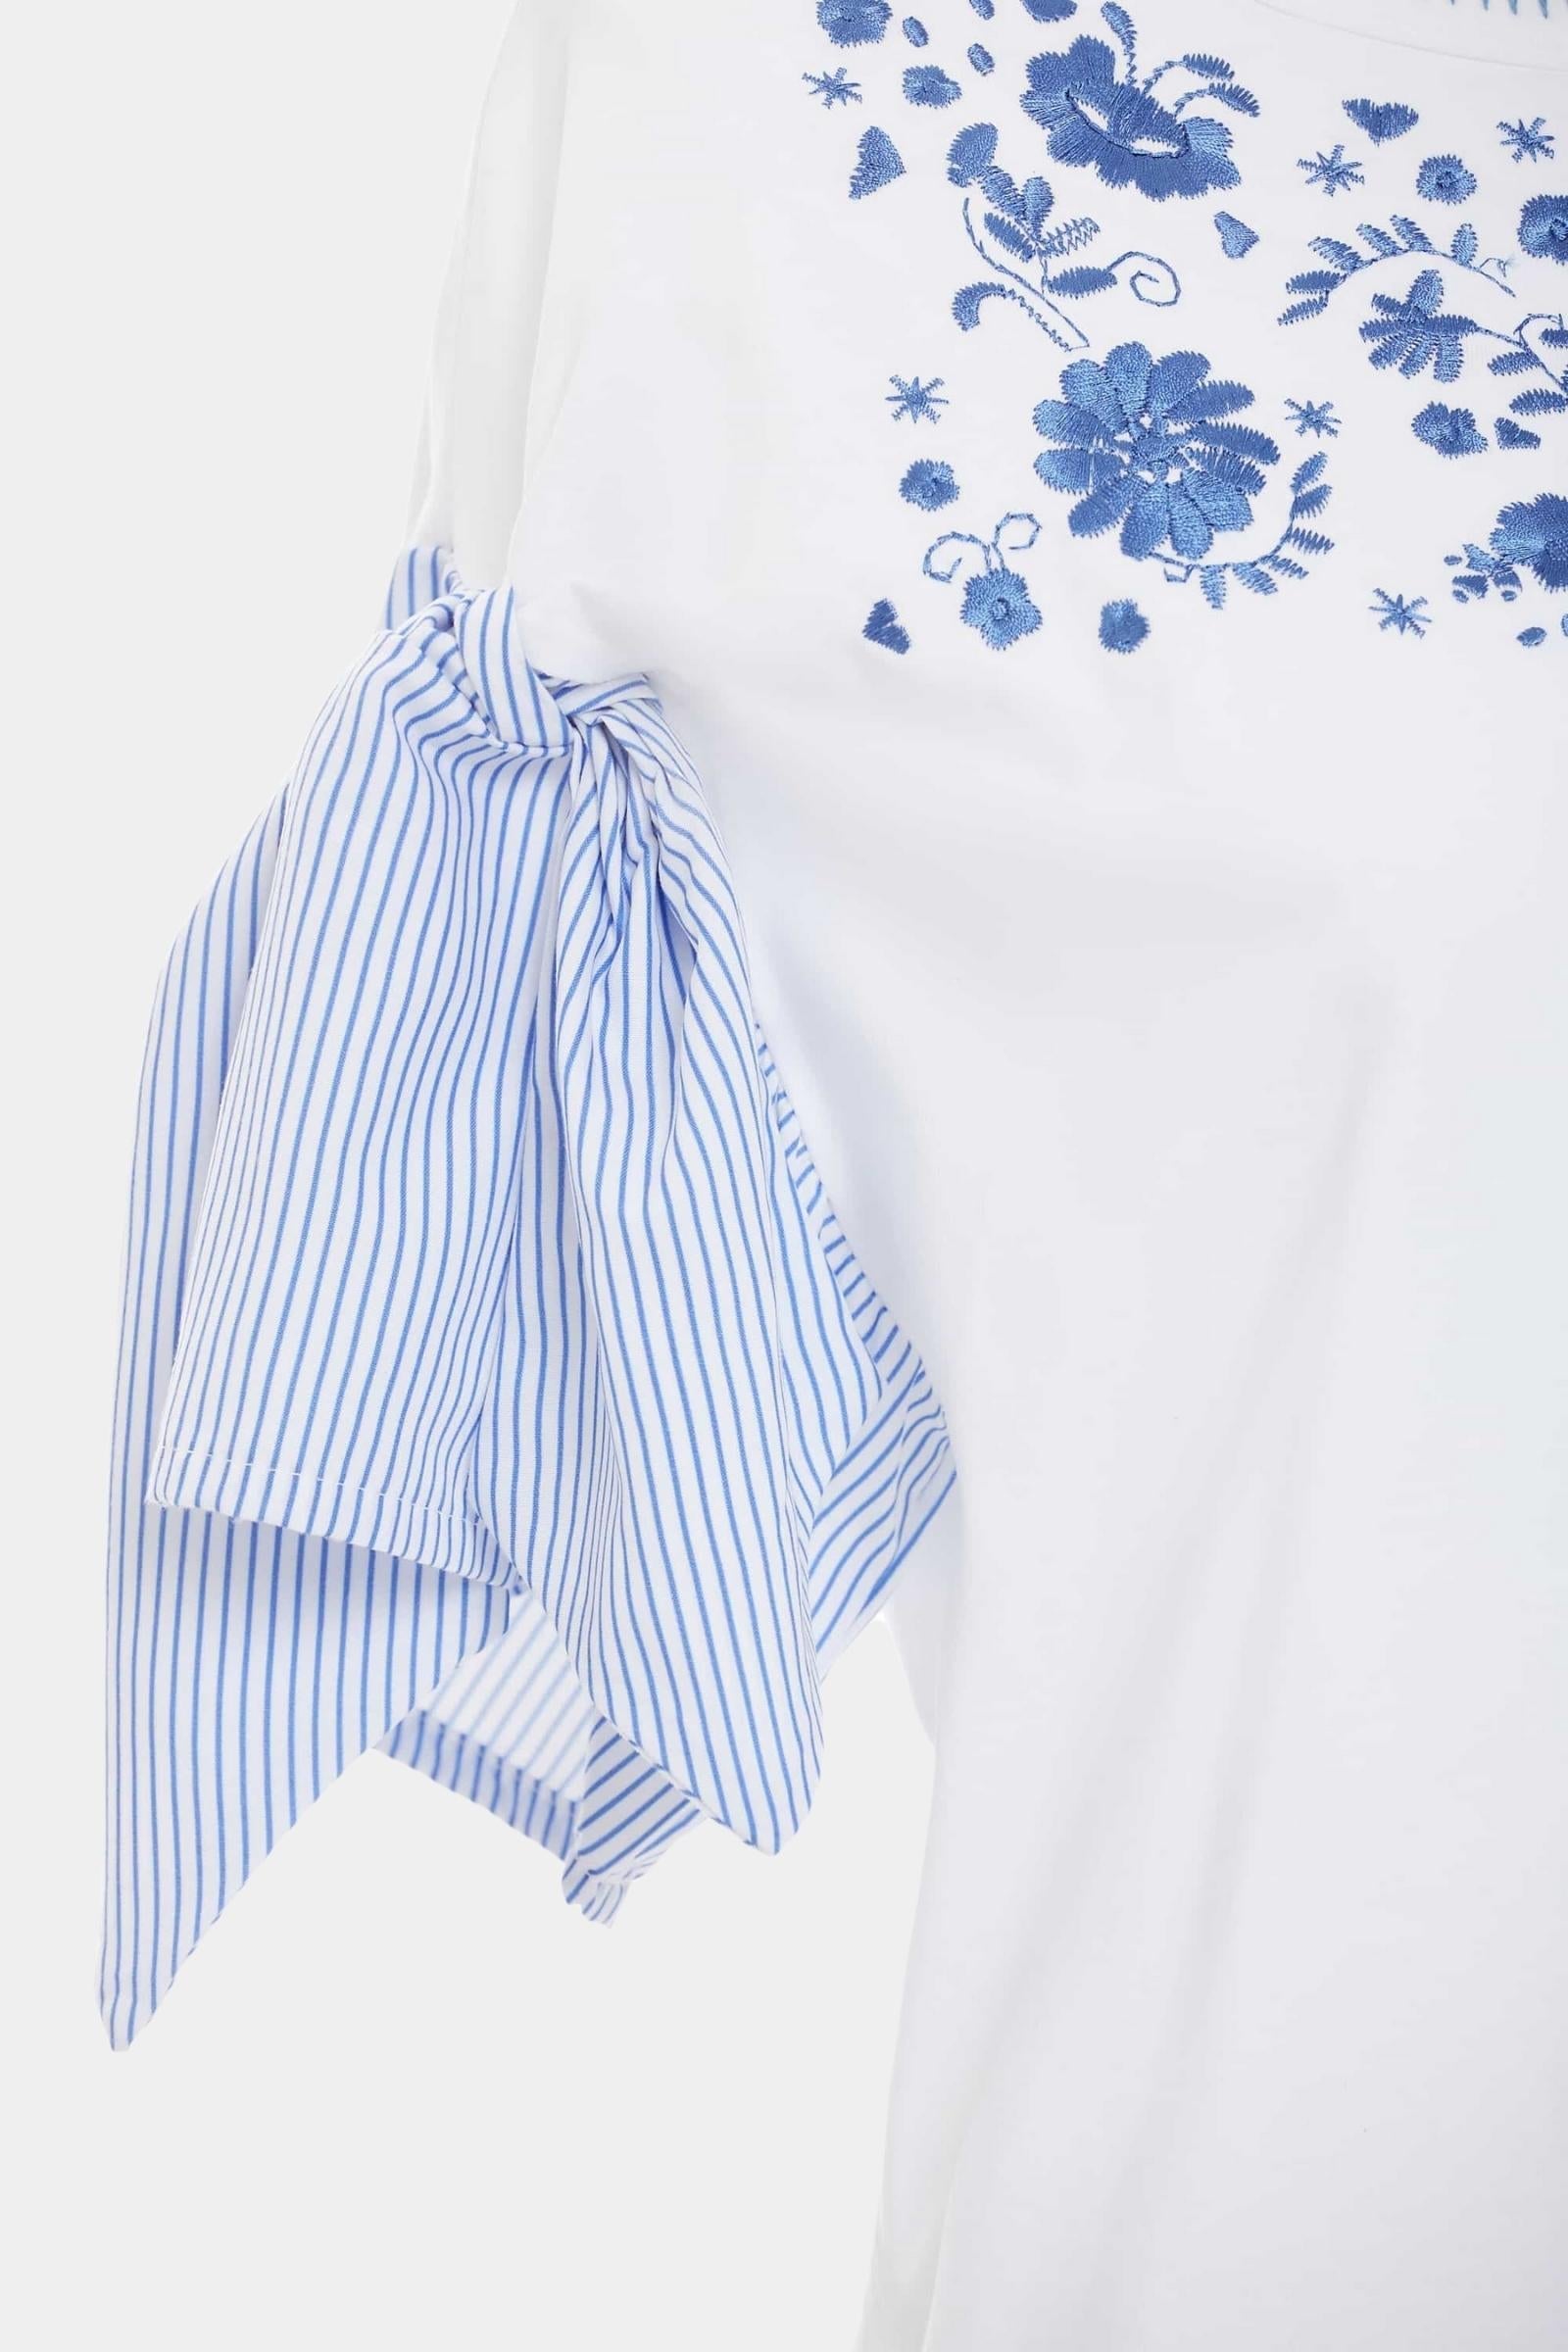 Camiseta blanca bordada con mangas estampado rayas - lolitasyl.com